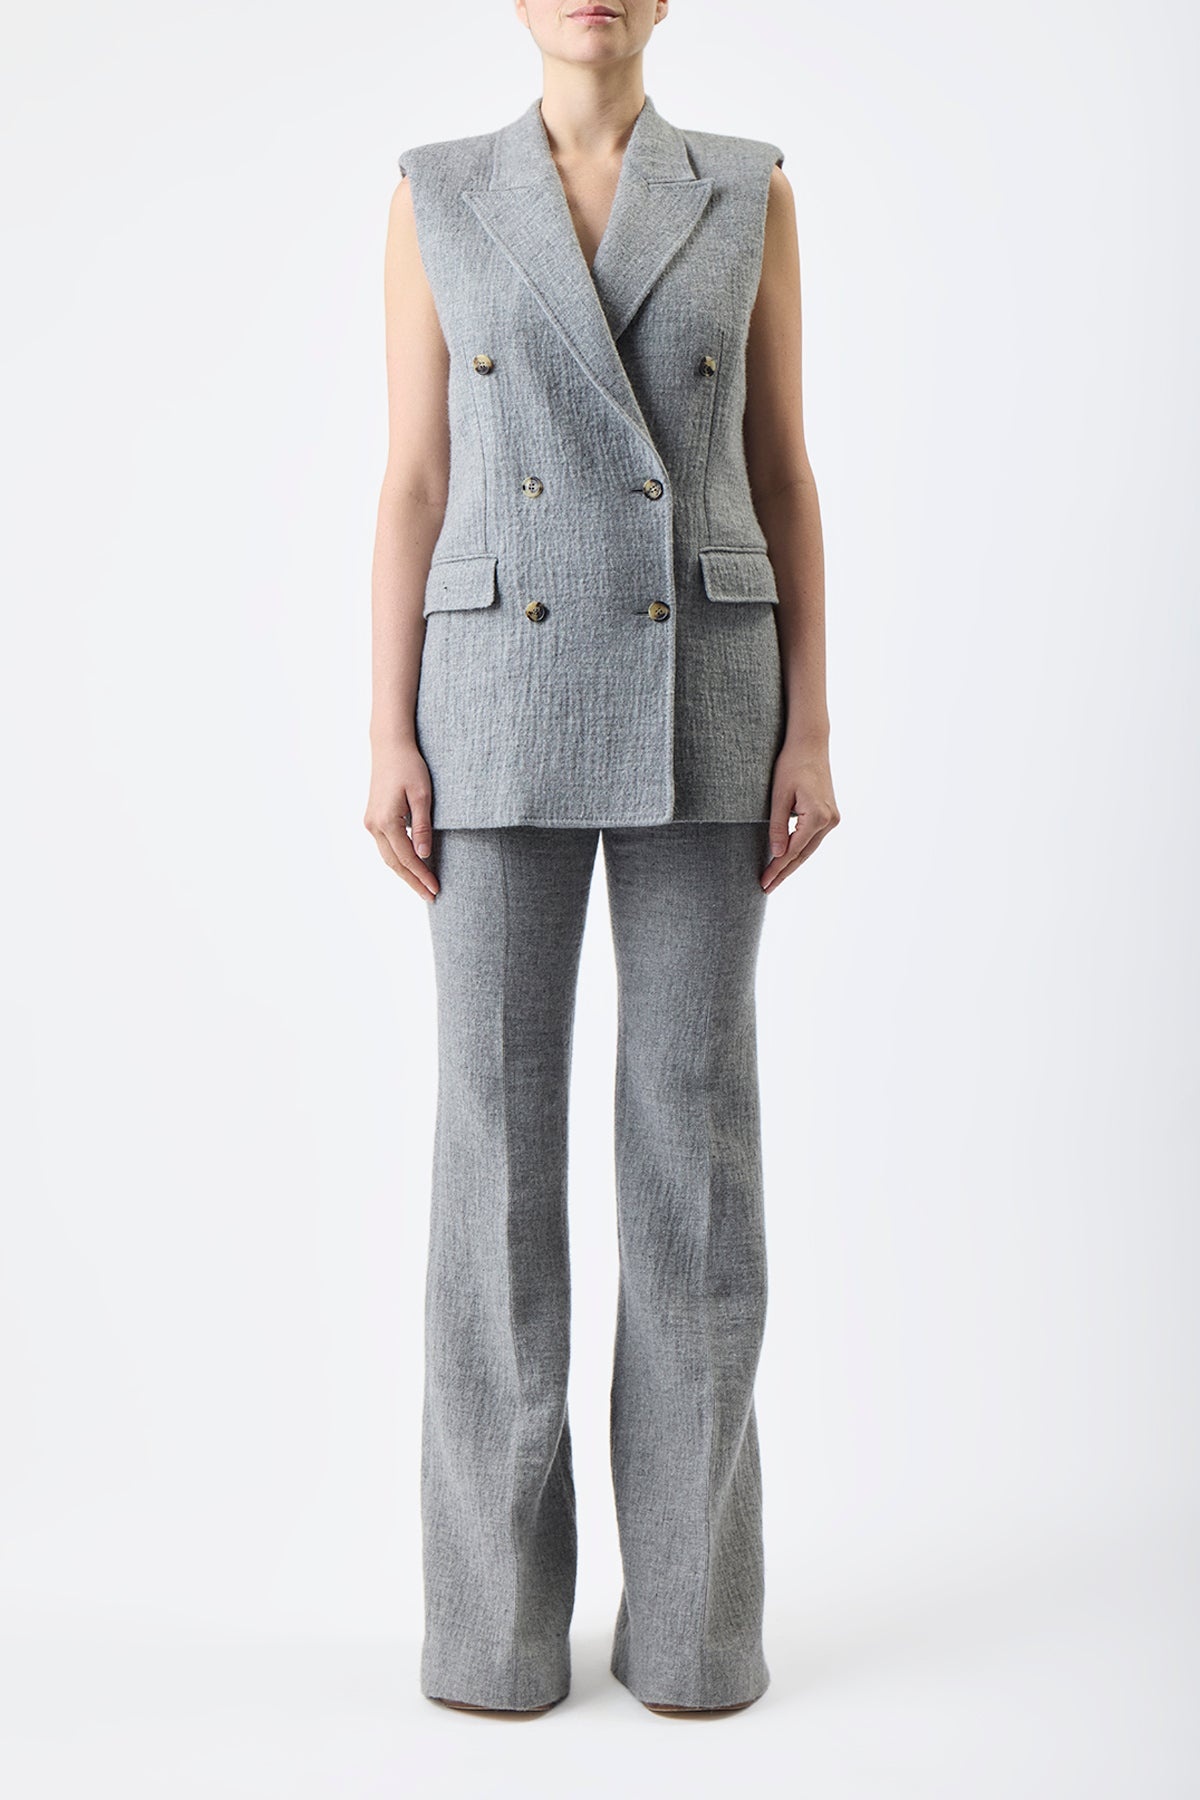 Mayte Vest in Light Grey Cashmere Linen - 3